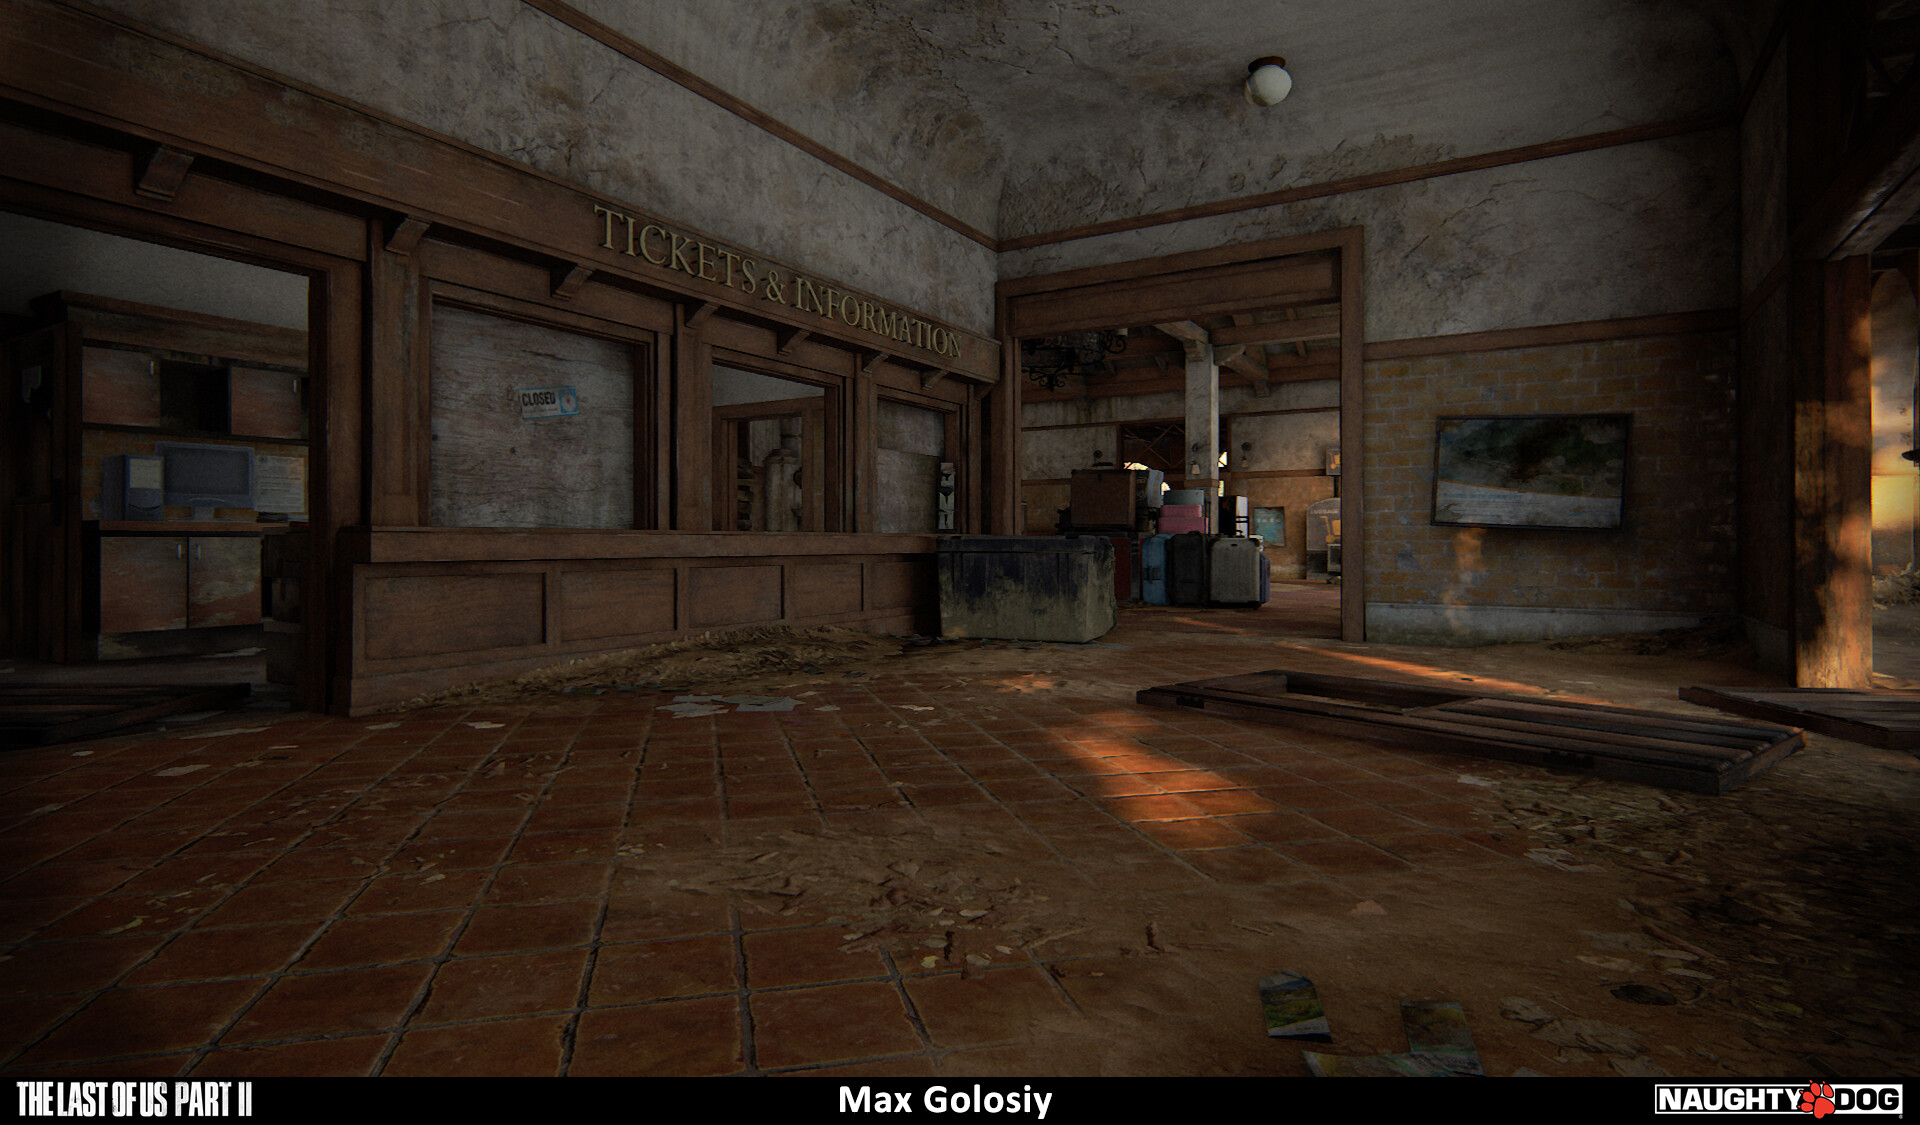 Max Golosiy - The Last of Us Part II - Santa Barbara Train Station